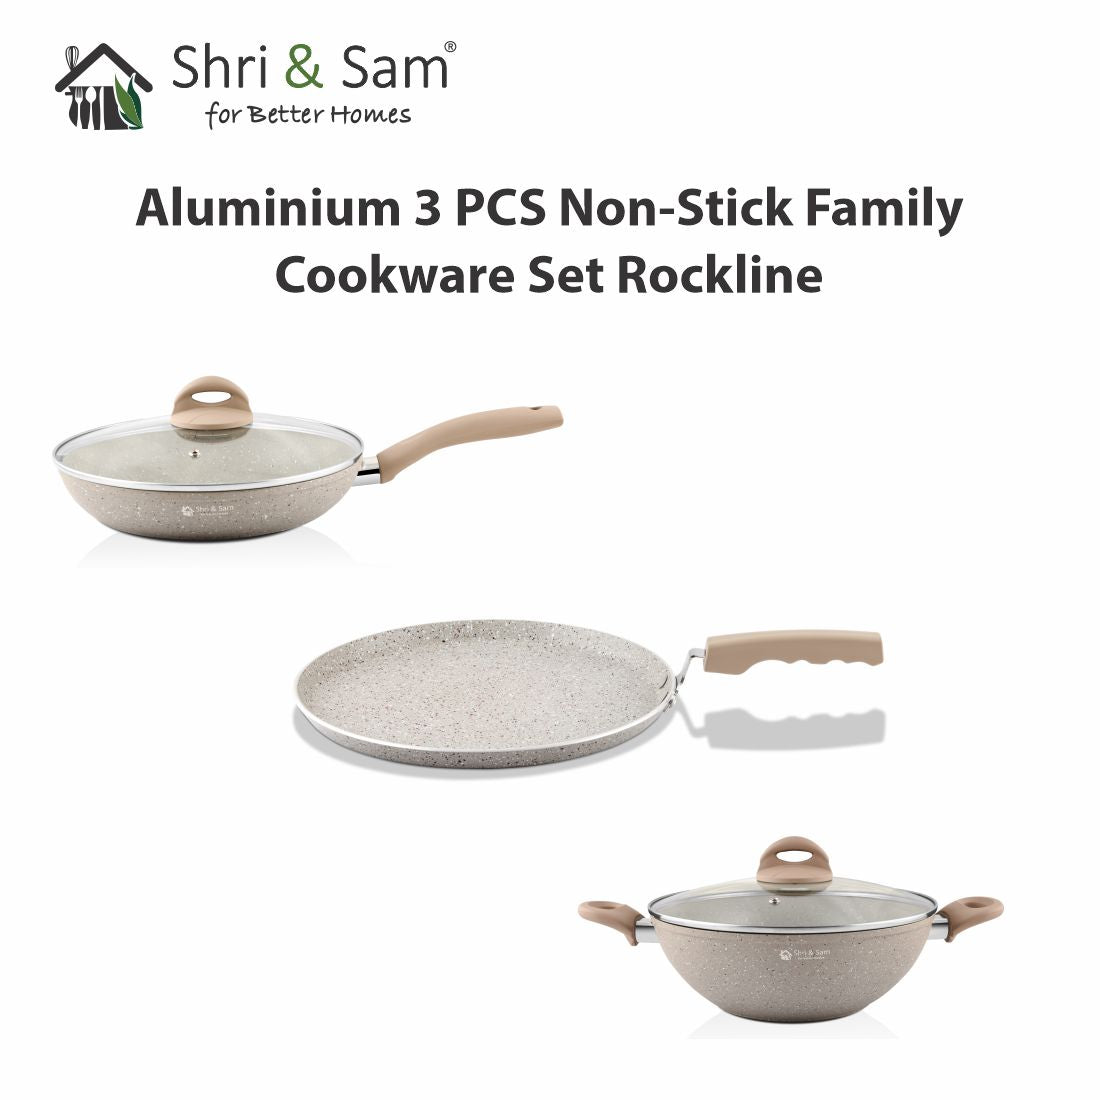 Aluminium 3 PCS Non-Stick FAMILY Cookware Set Rockline